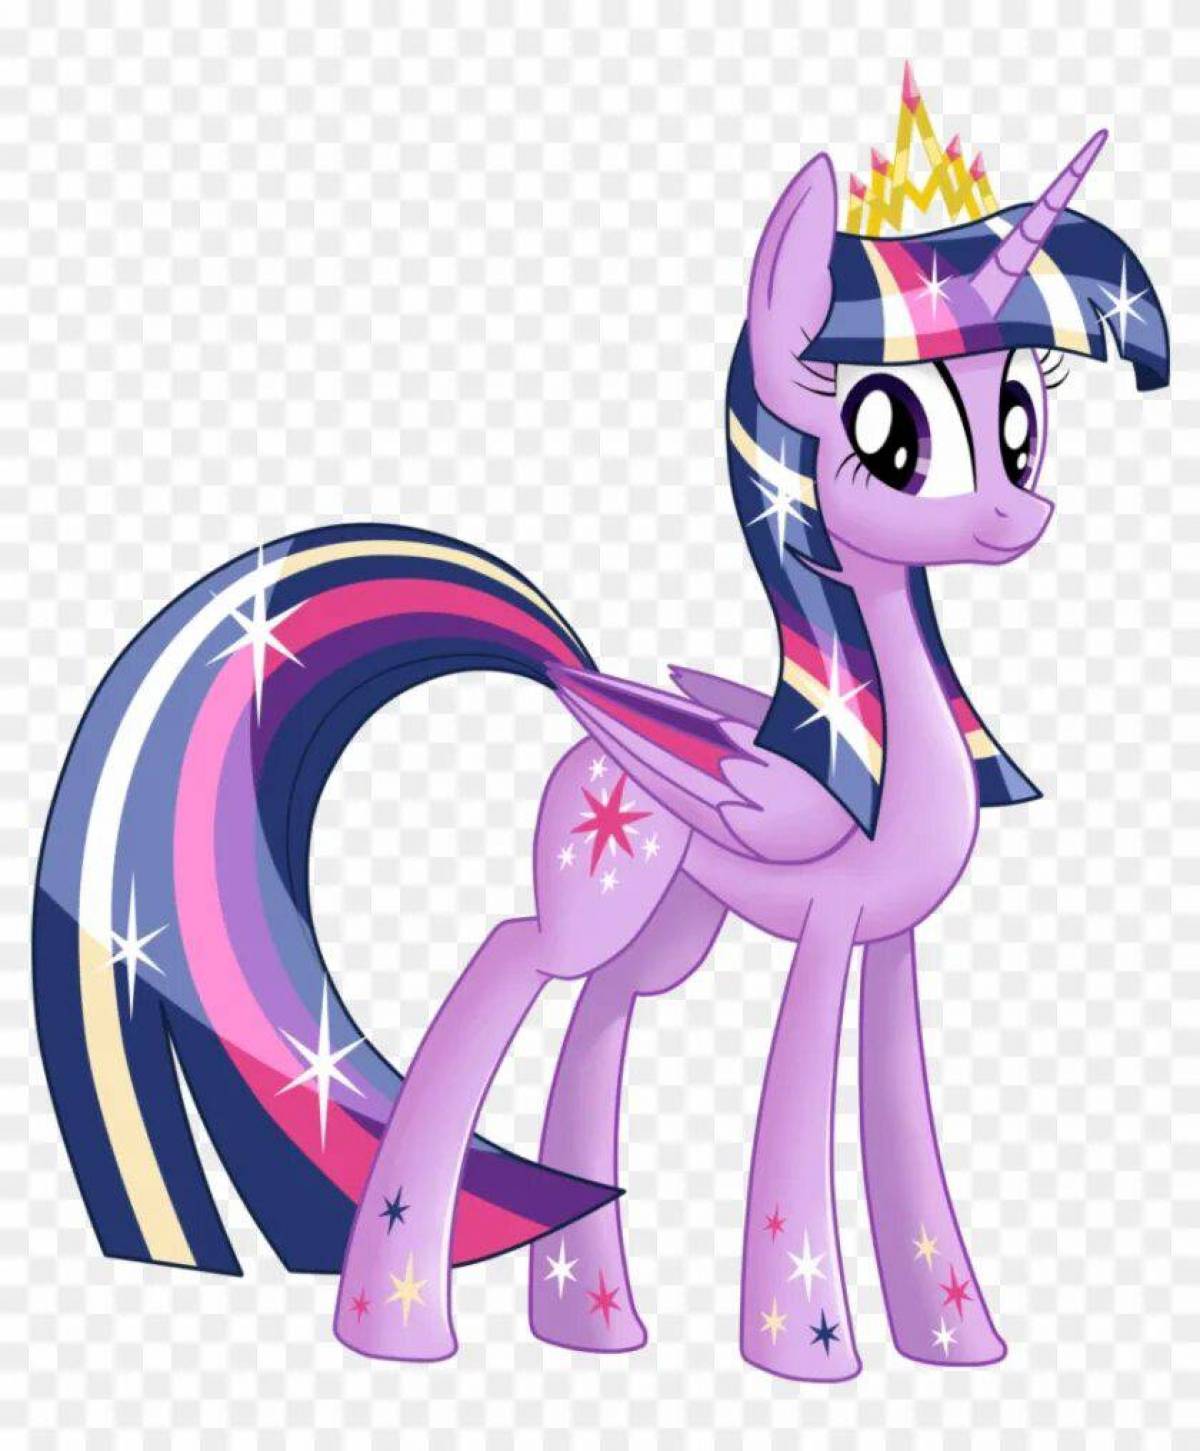 My little pony twilight. Сумеречная Искорка/Твайлайт Спаркл. Твайлайт принцесса Аликорн. Принцесса Твайлайт Спаркл. Твайлайт и Искорка.